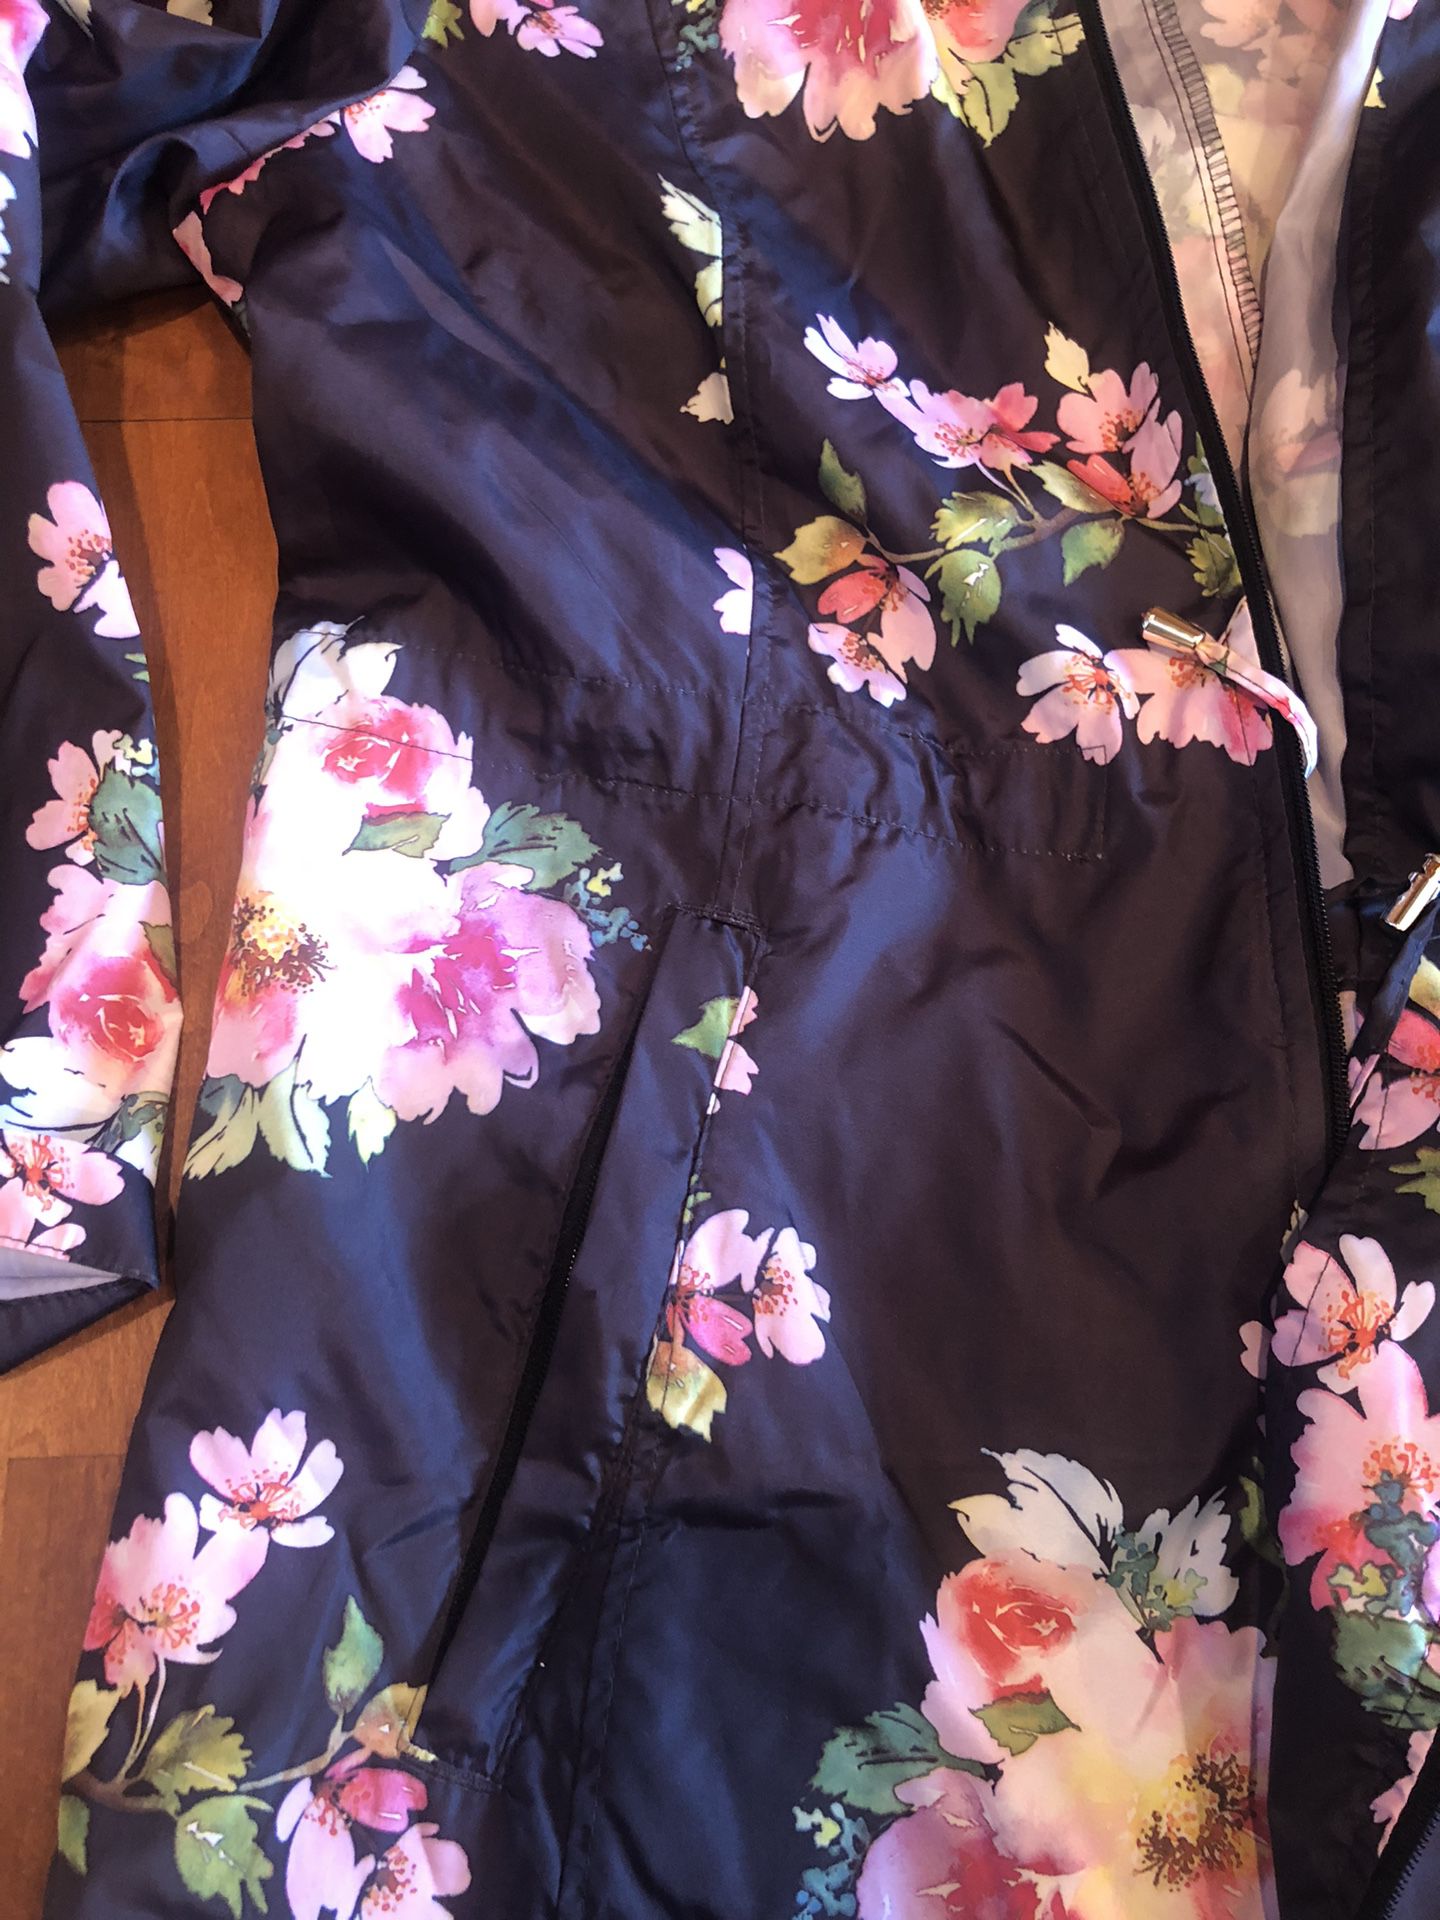 Woman’s Susan Graver Floral Raincoat Shipping Available 